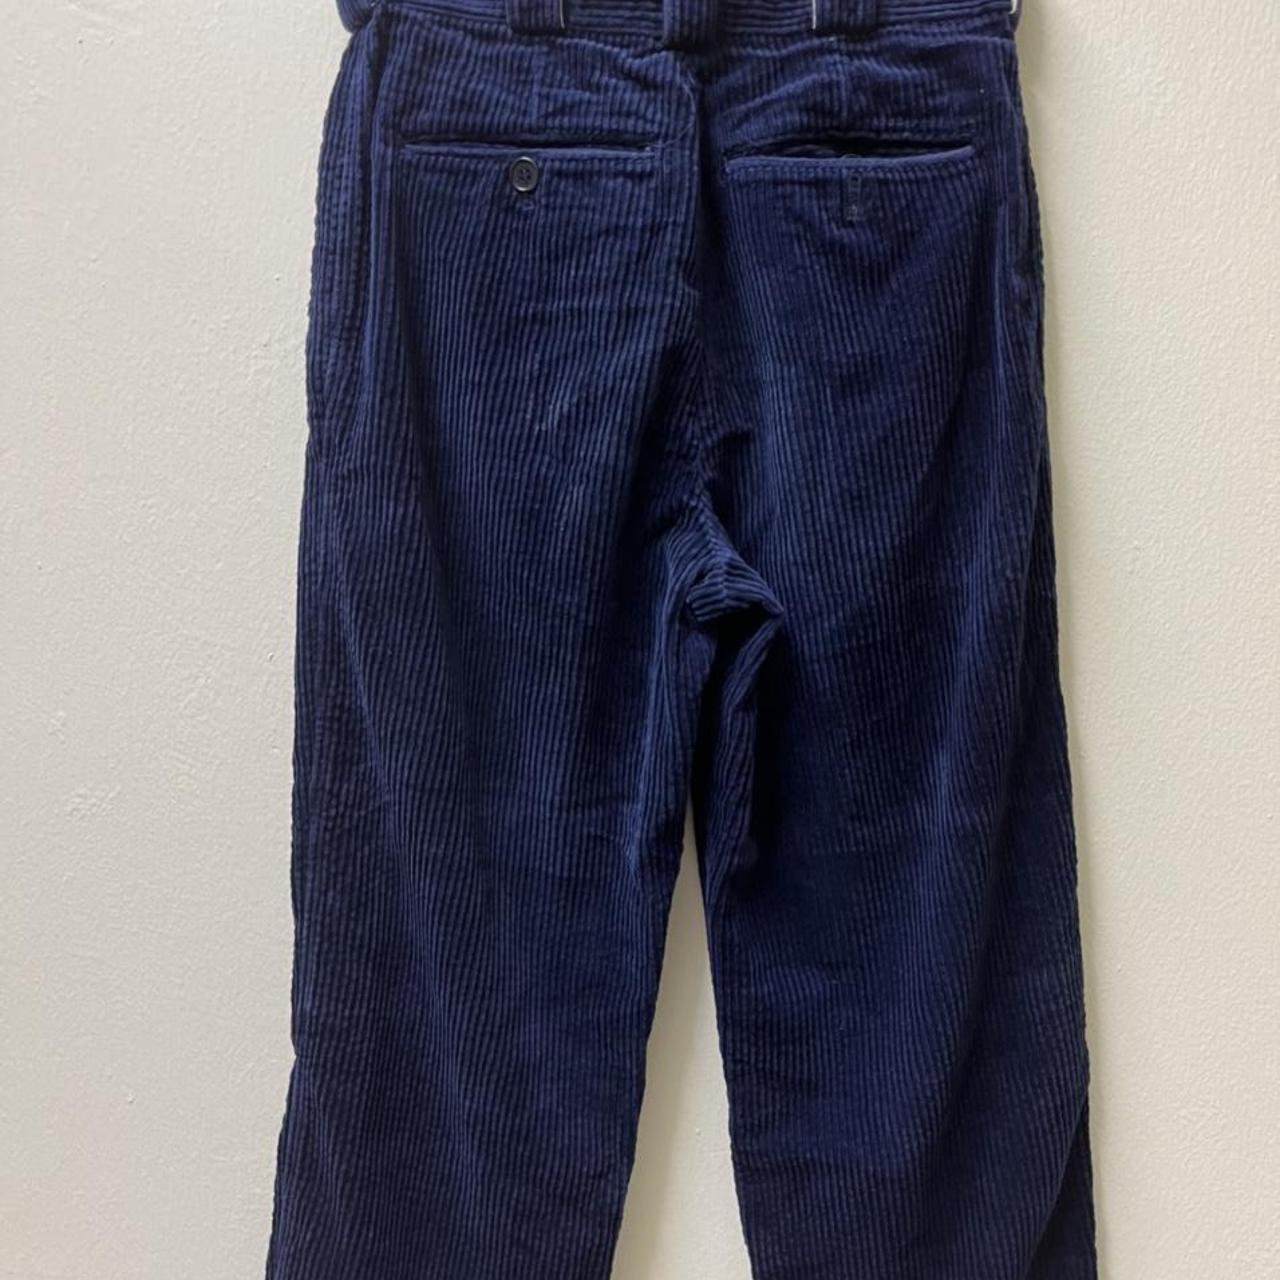 Product Image 2 - Nigel Cabourn Corduroy Pants
Size 29